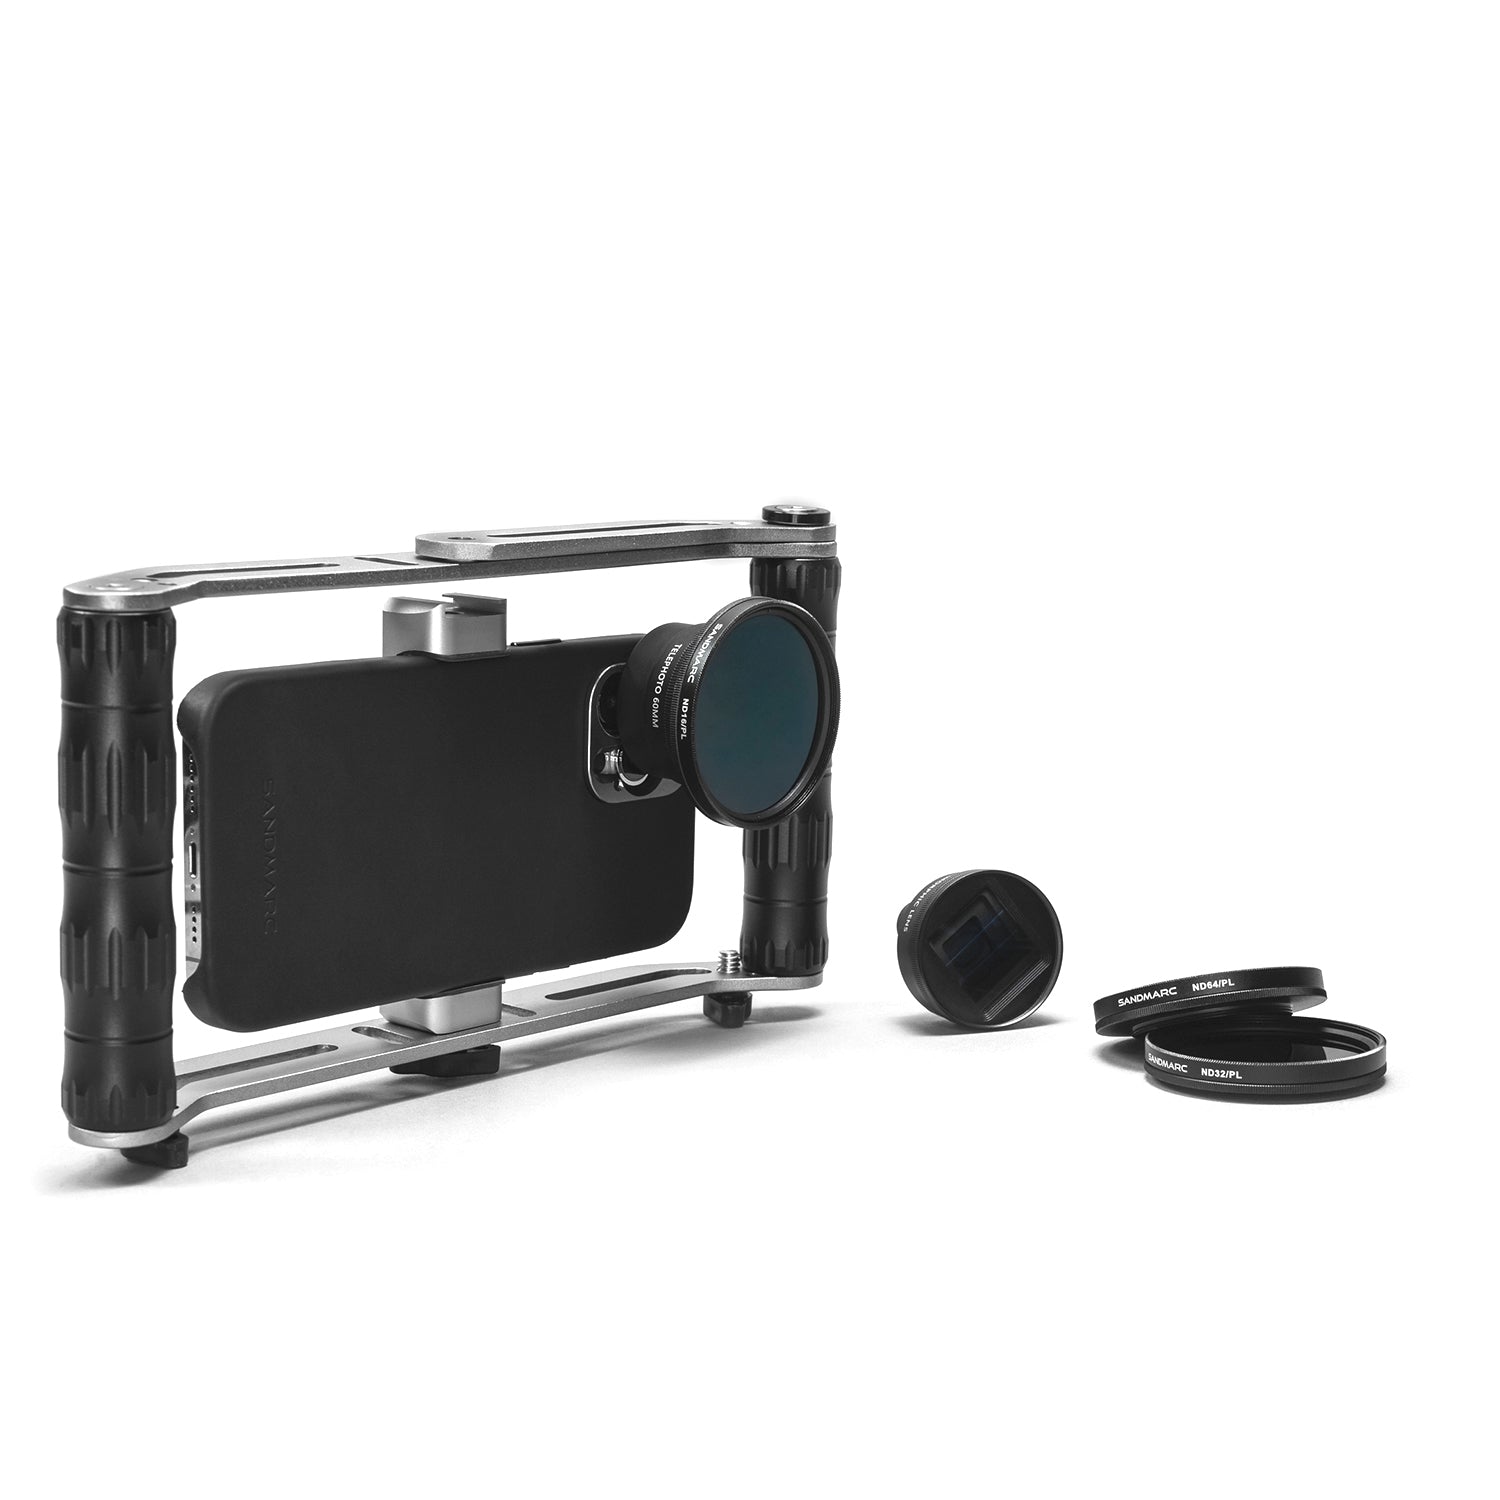 iPhone 15 Pro Max Lens Kit for Video - Film Edition - SANDMARC